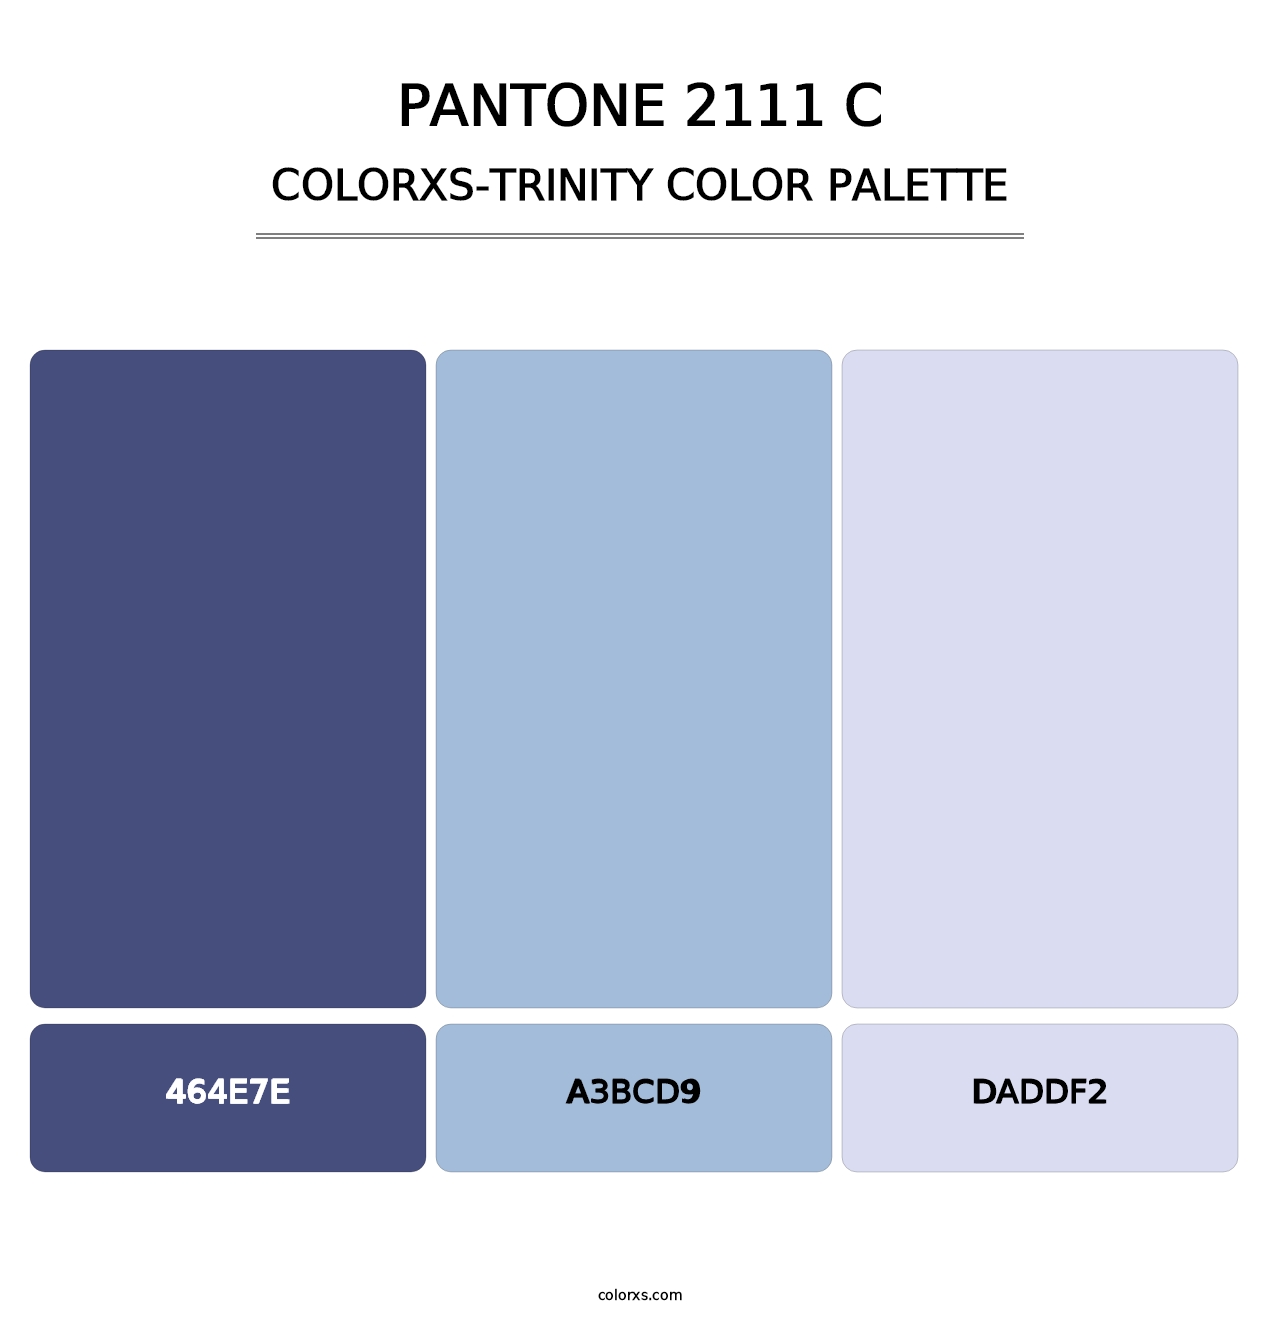 PANTONE 2111 C - Colorxs Trinity Palette